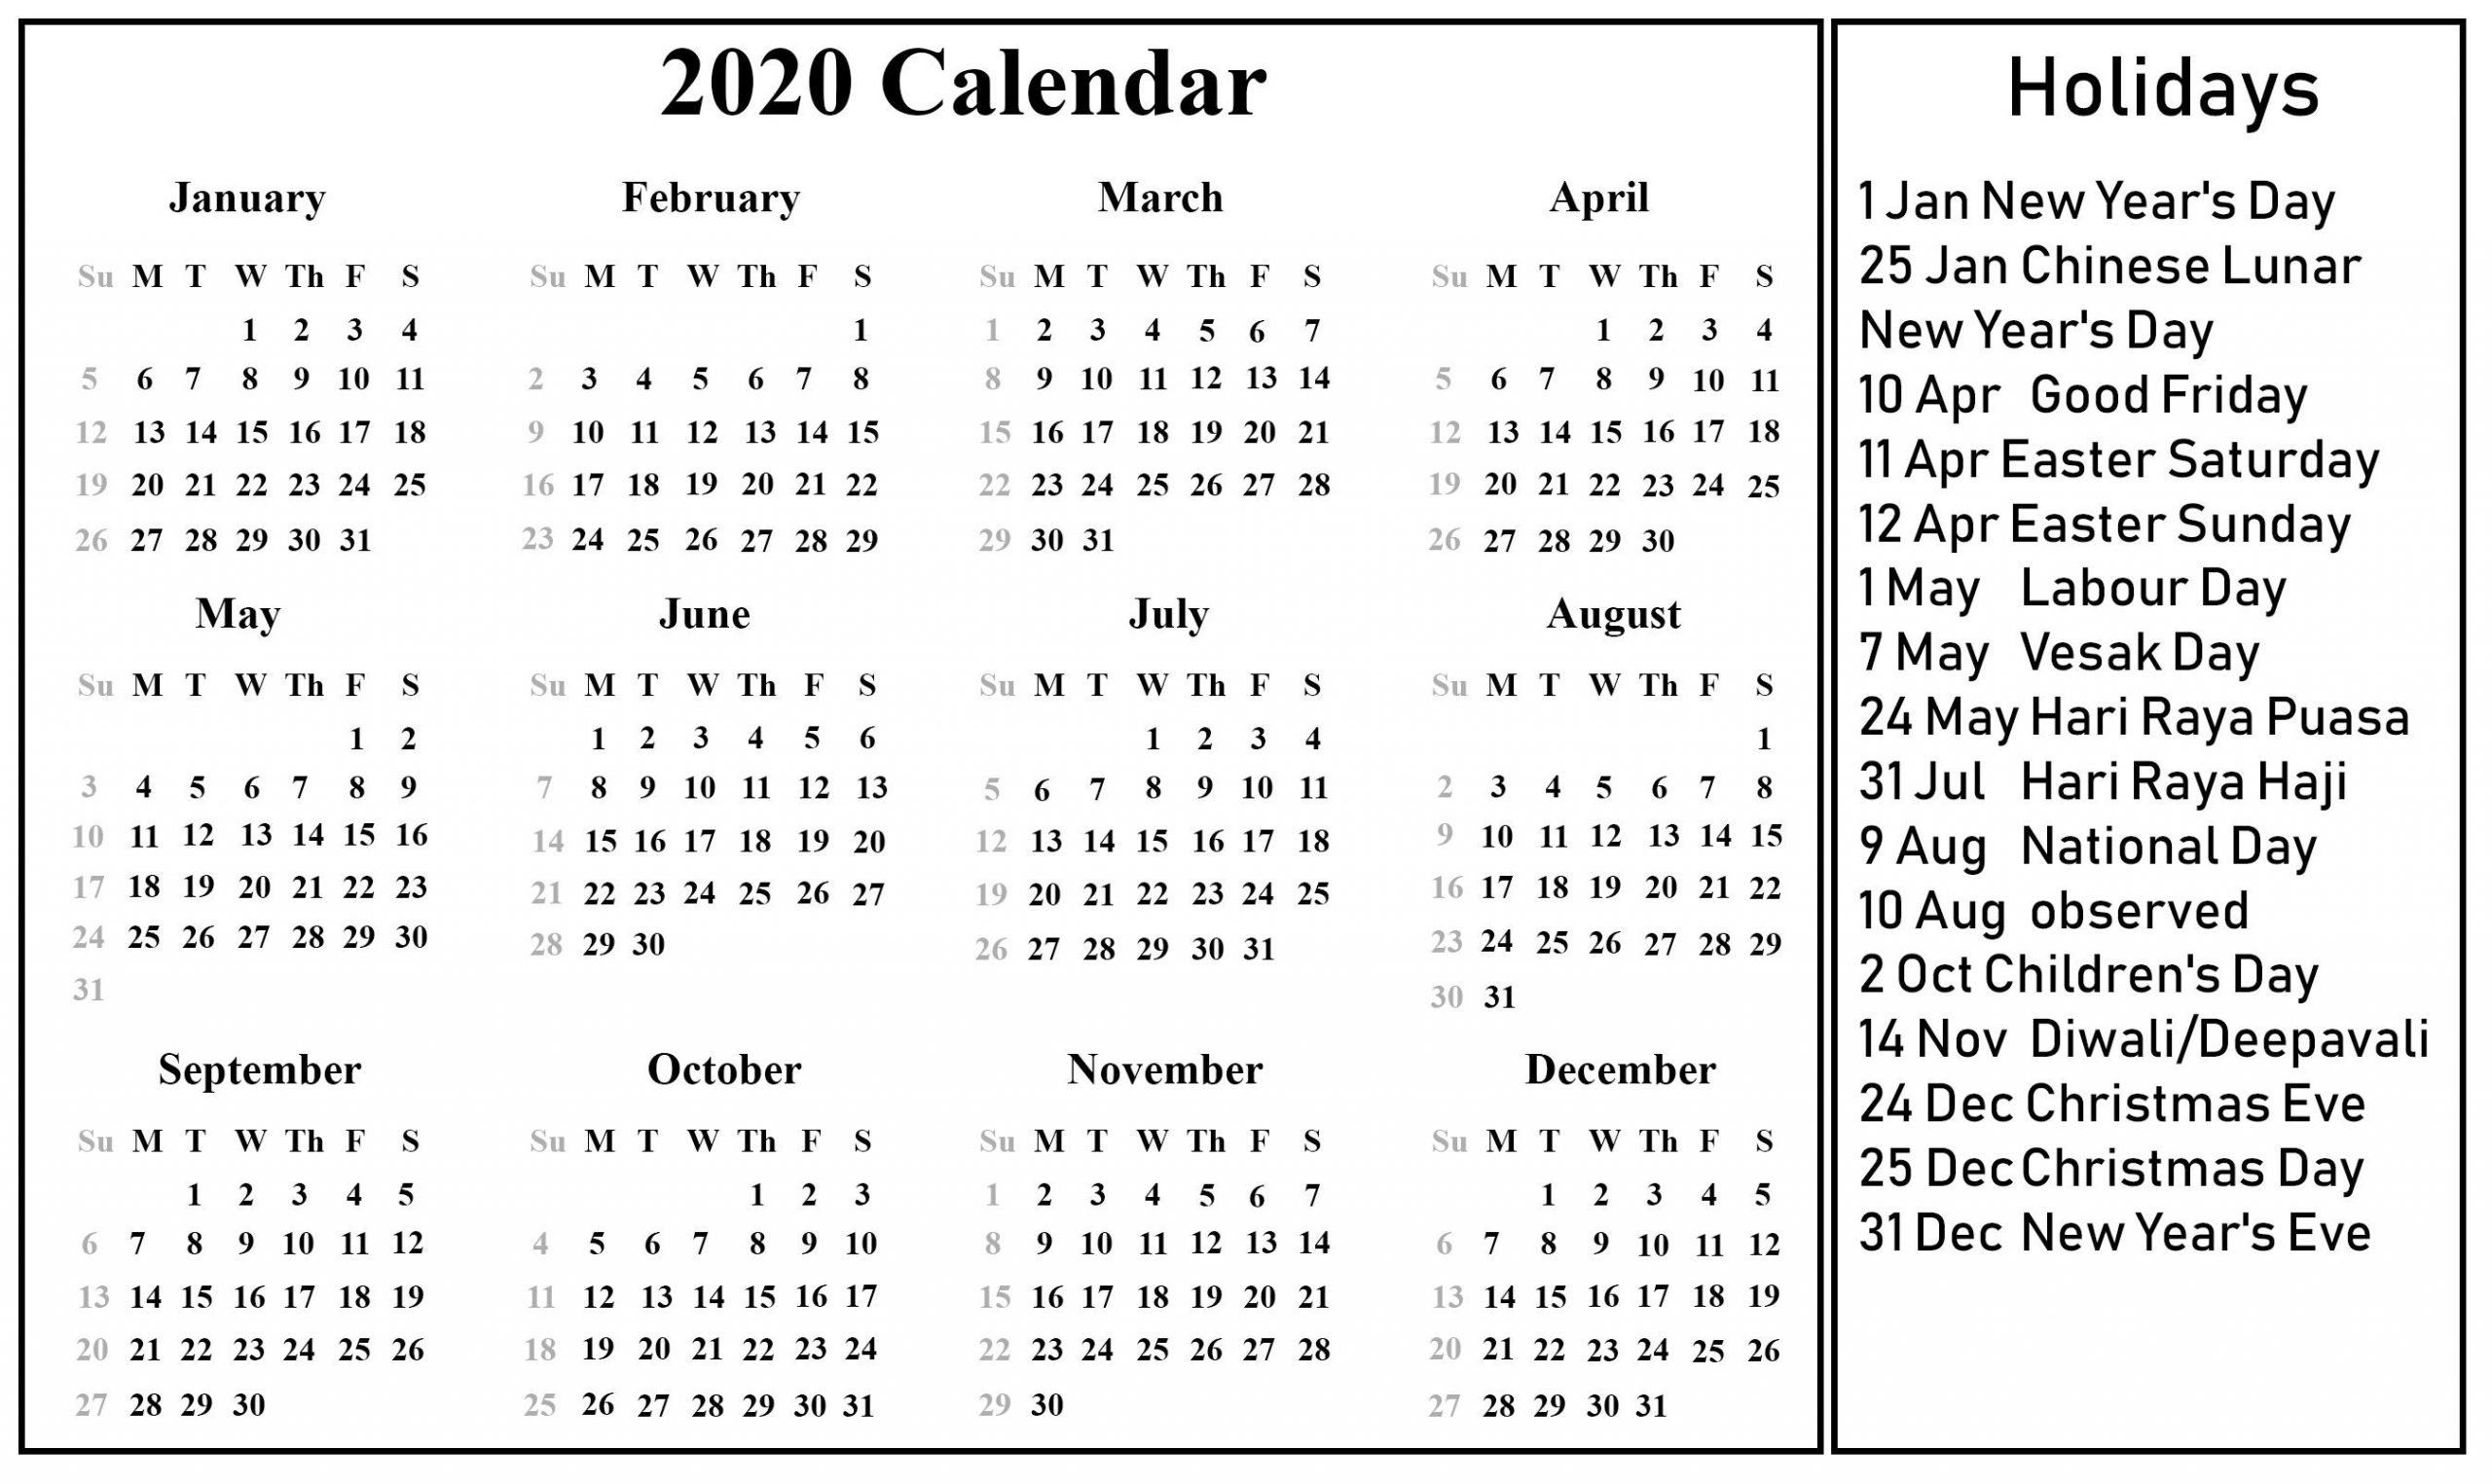 Impressive 2020 Calendar Holidays Sri Lanka | Holiday-Mercantile Holidays In 2021 Sri Lanka